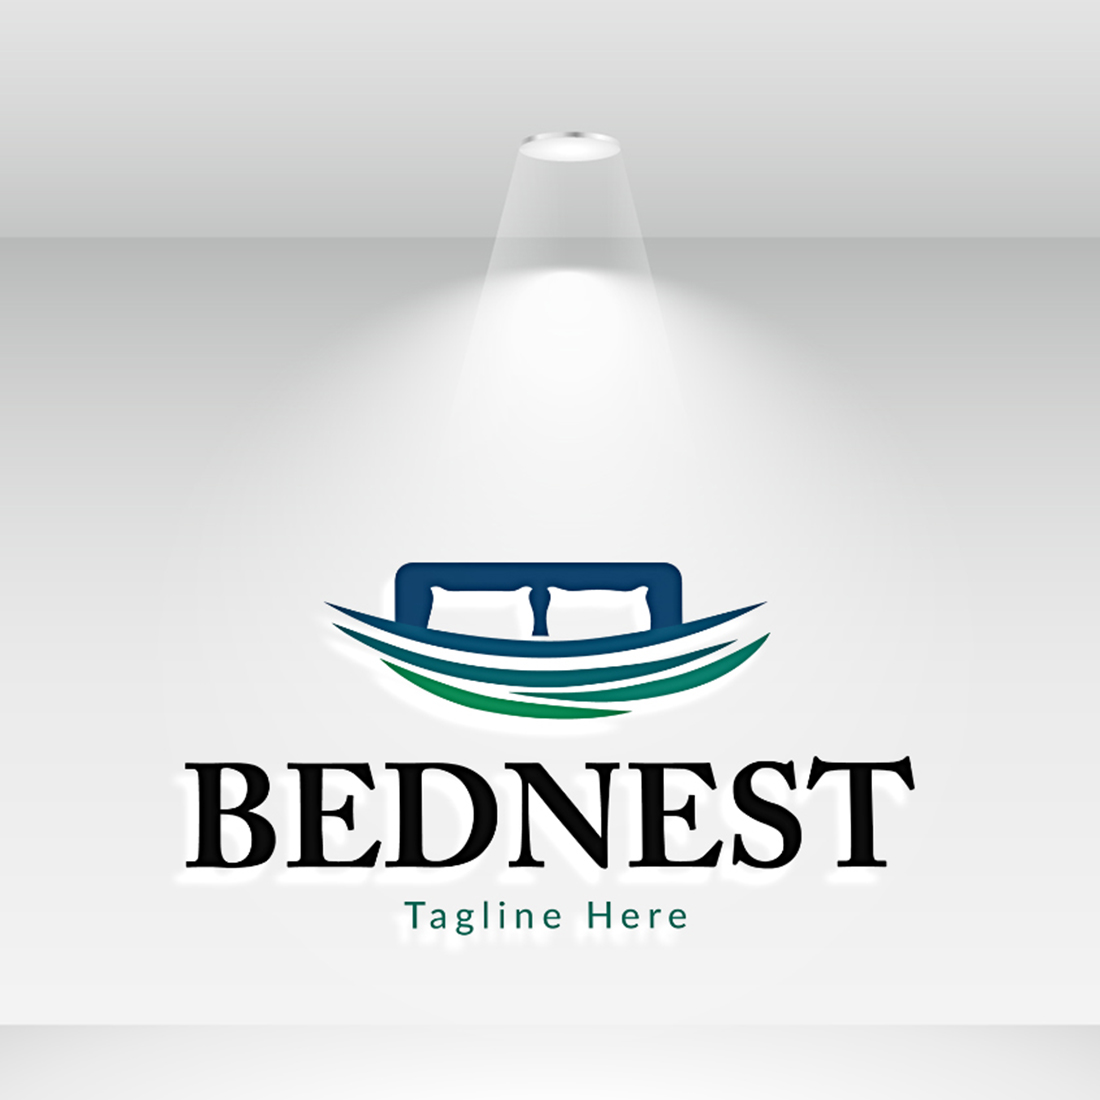 Minimal modern logo "bednest logo" preview image.